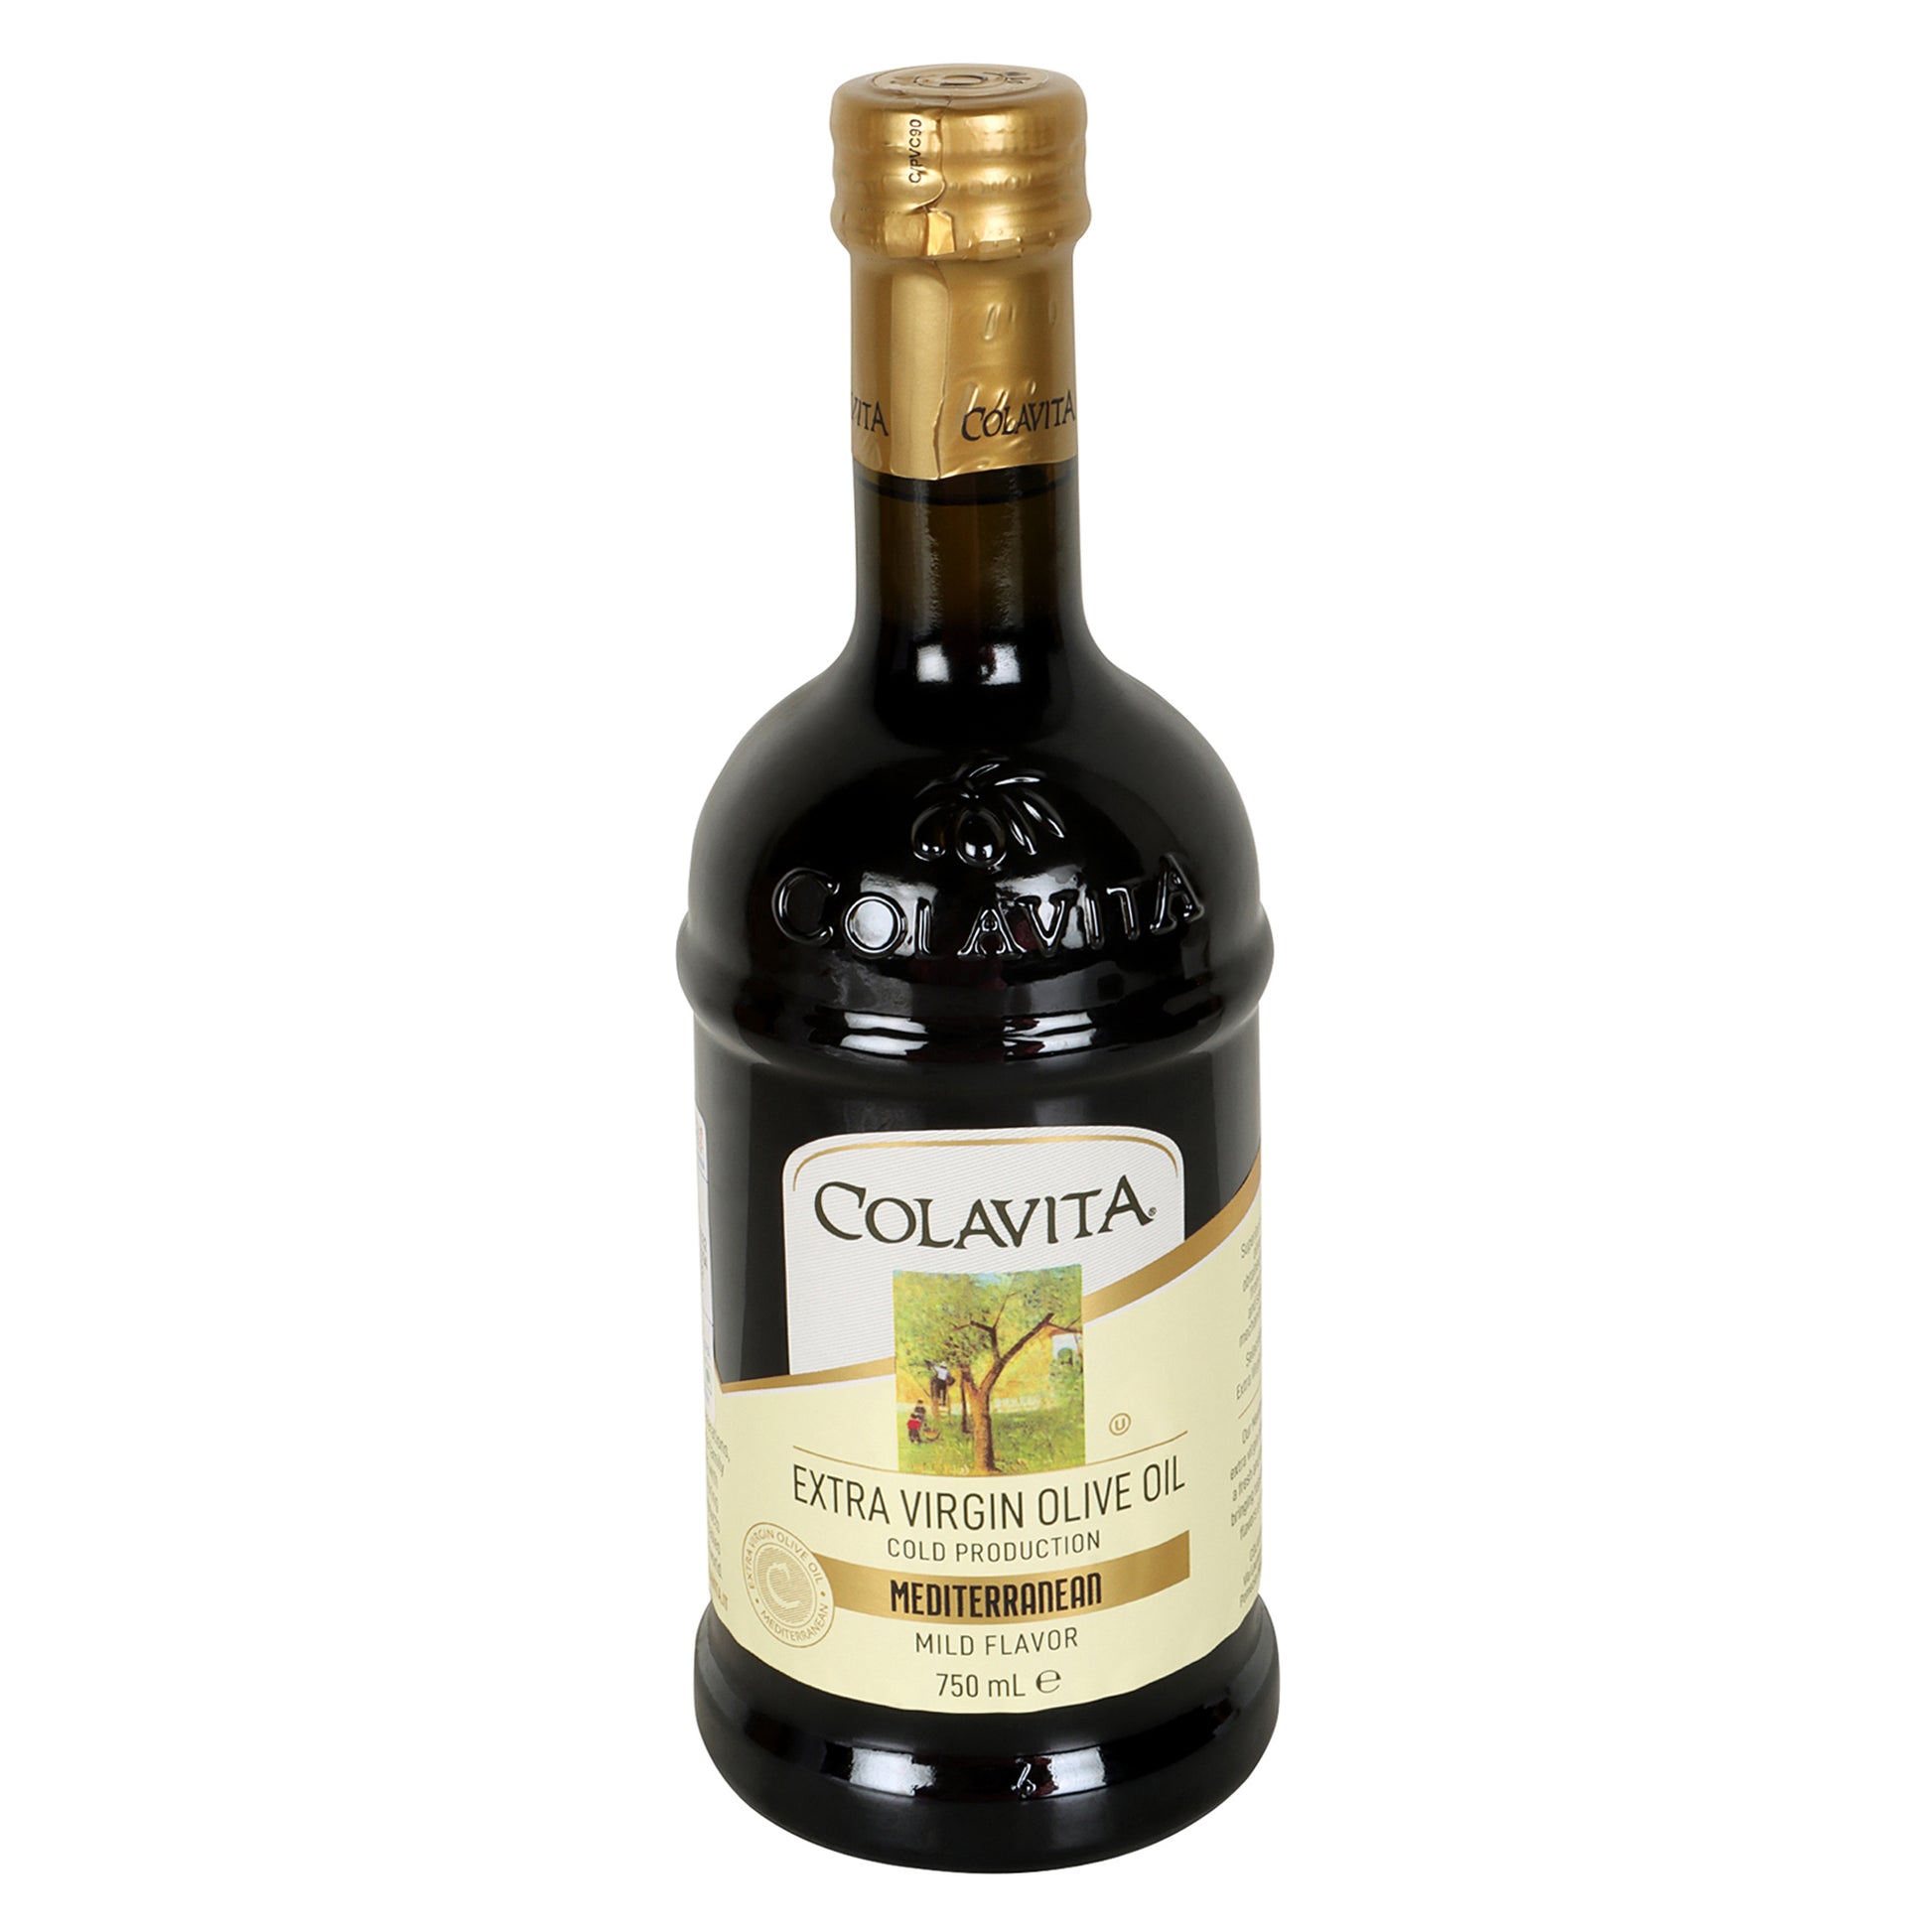 Colavita Mediterranean Extra Virgin Olive Oil Premium Selection Bottle